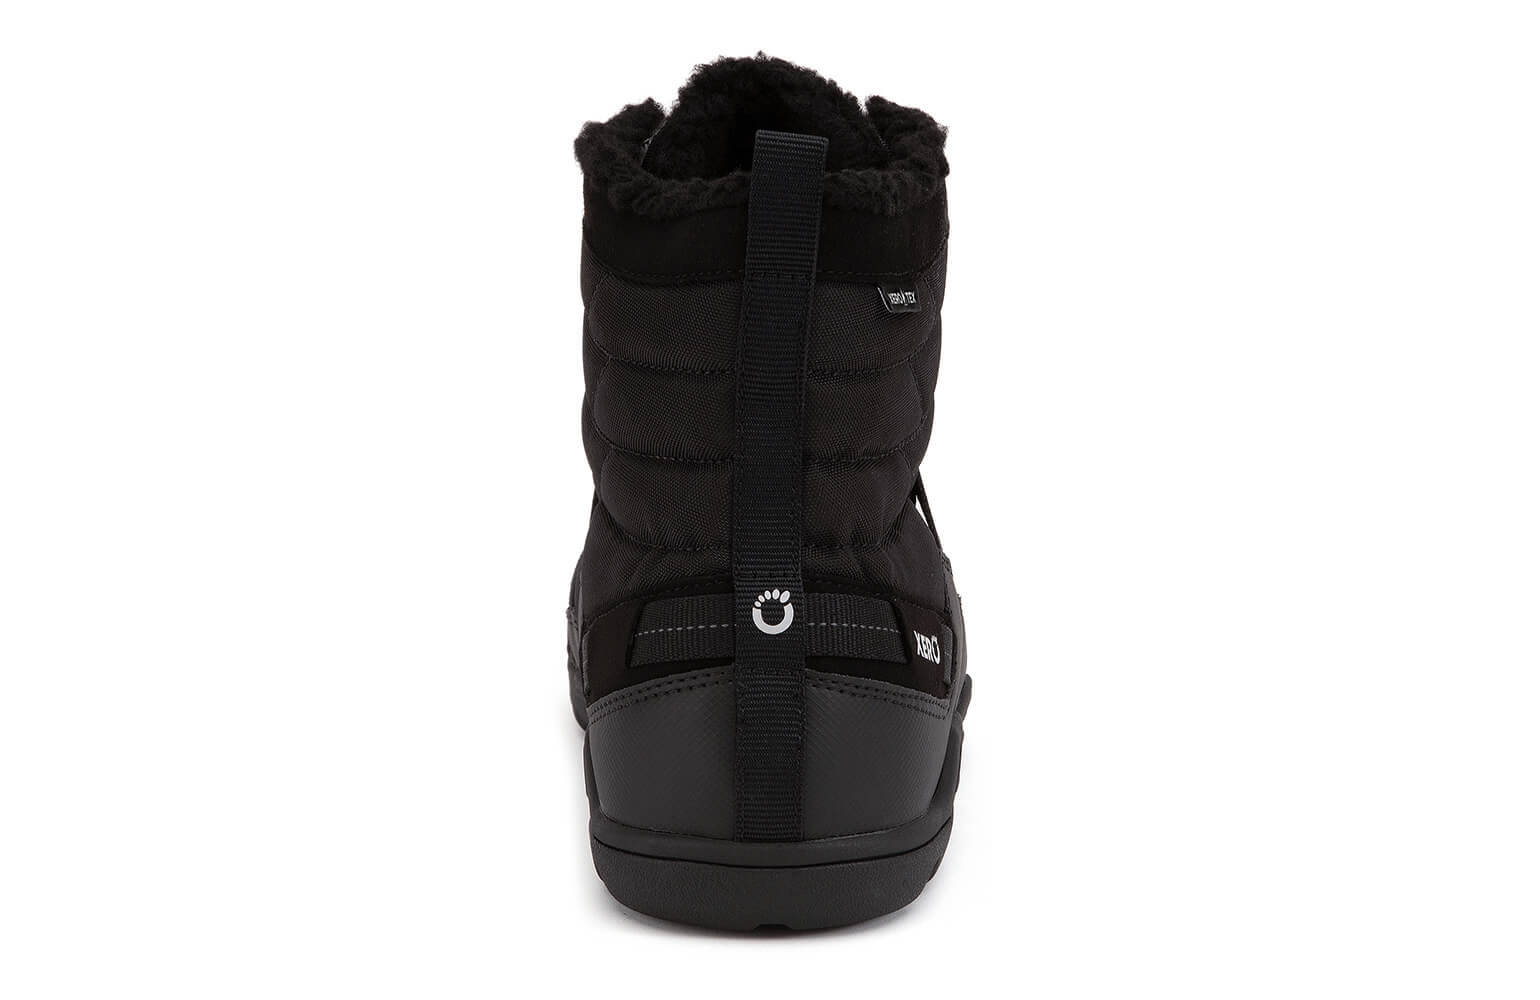 Xero Shoes | Alpine | black w/o trees [AEM-BLC] heren, maat 45 eu